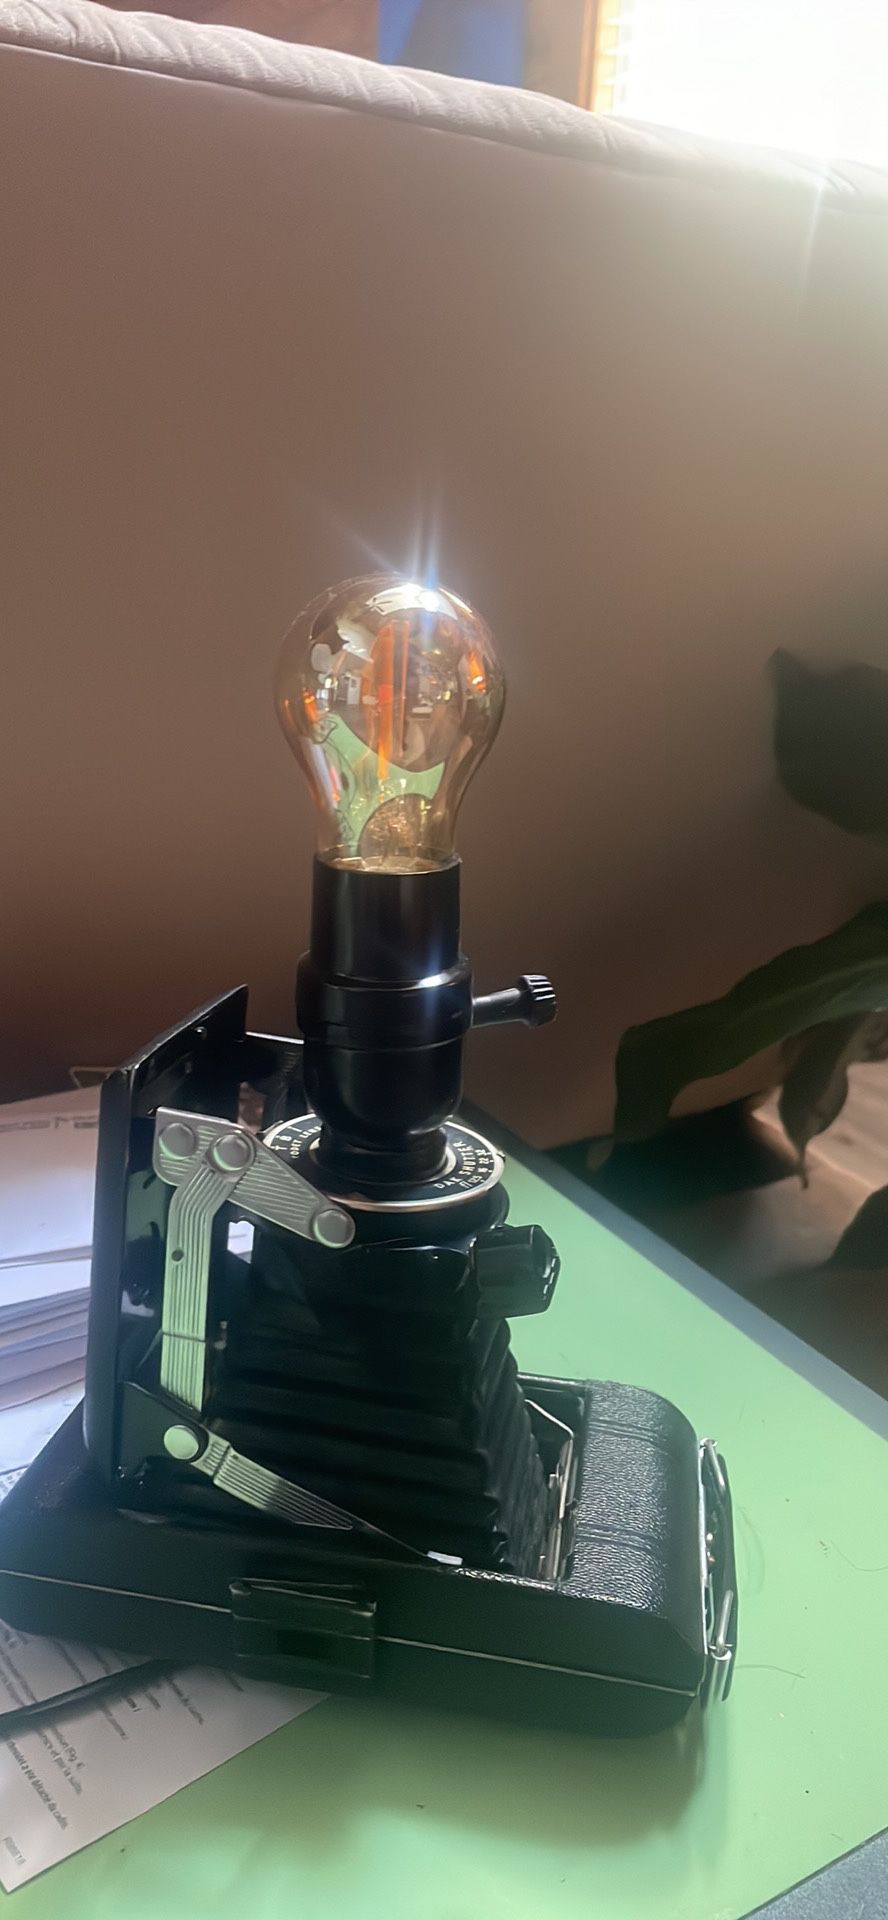 Vintage Camera Lamp